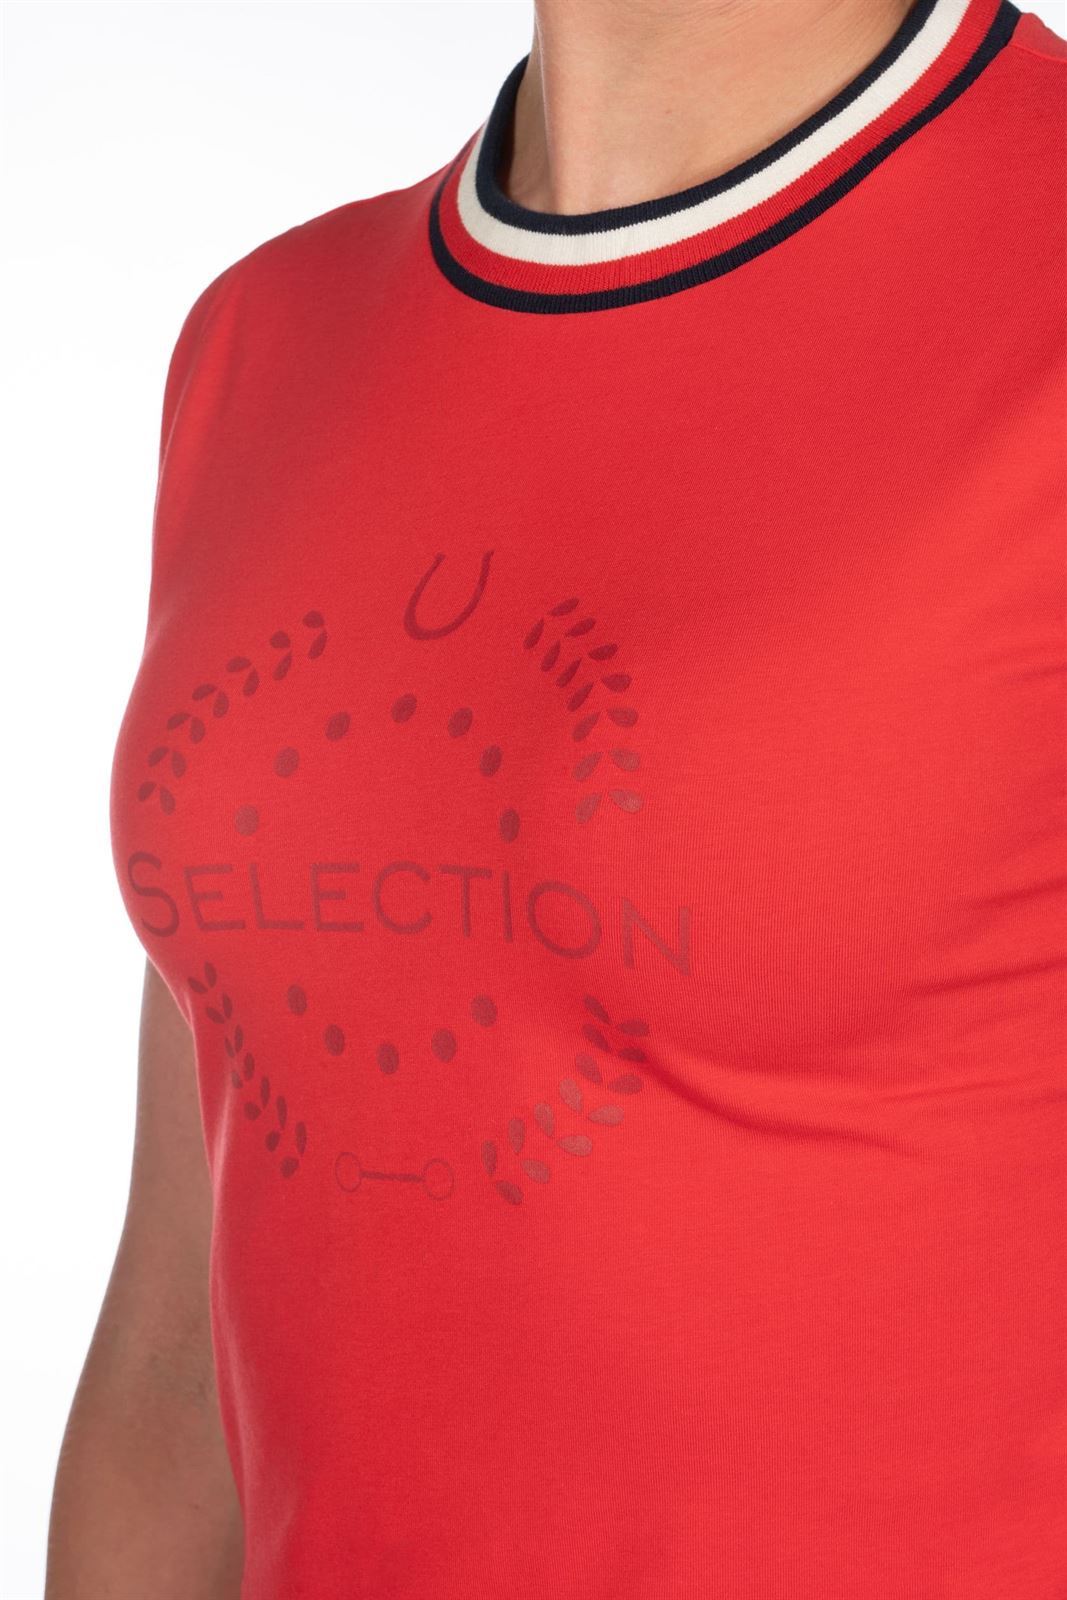 Camiseta HKM Sports Equipment Aruba mujer color rojo - Imagen 5